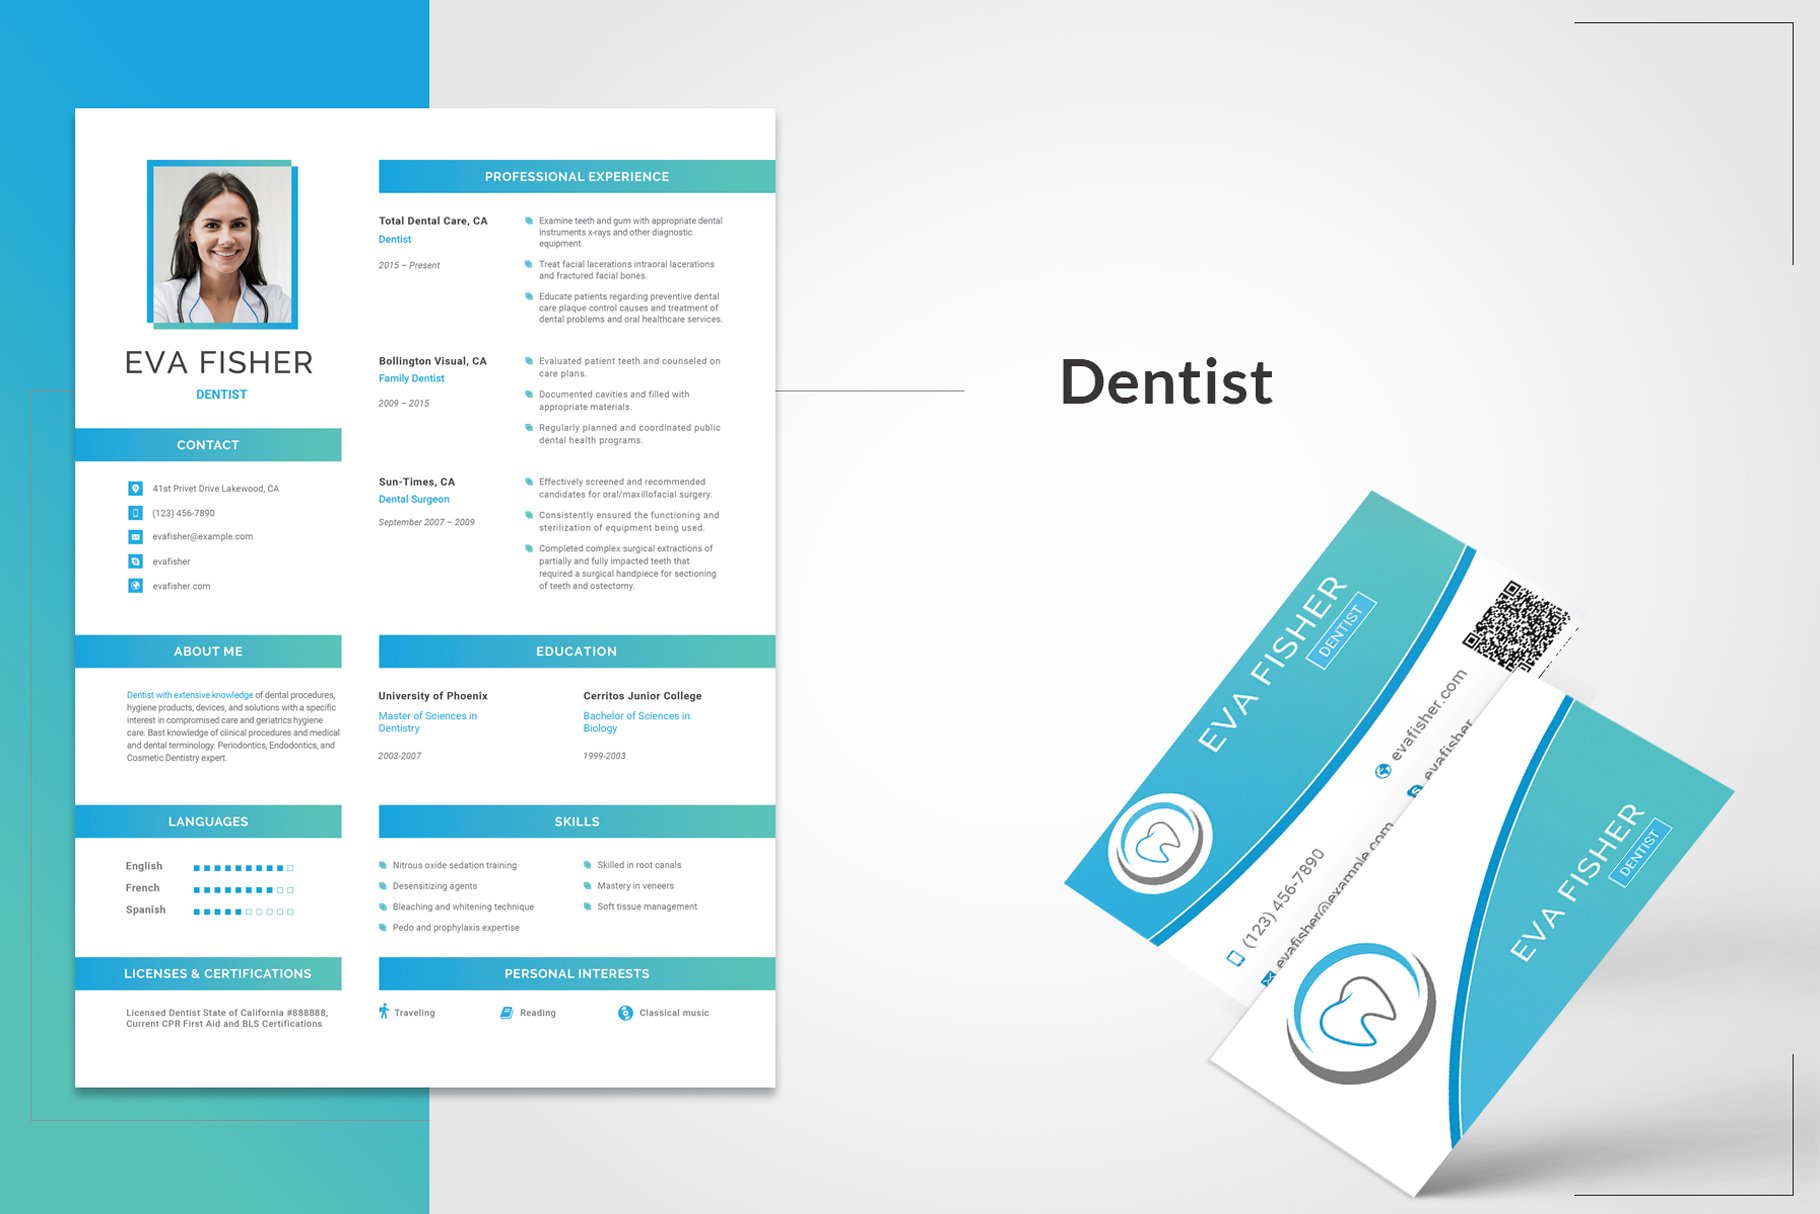 Printable Resume for Dentist cover image.